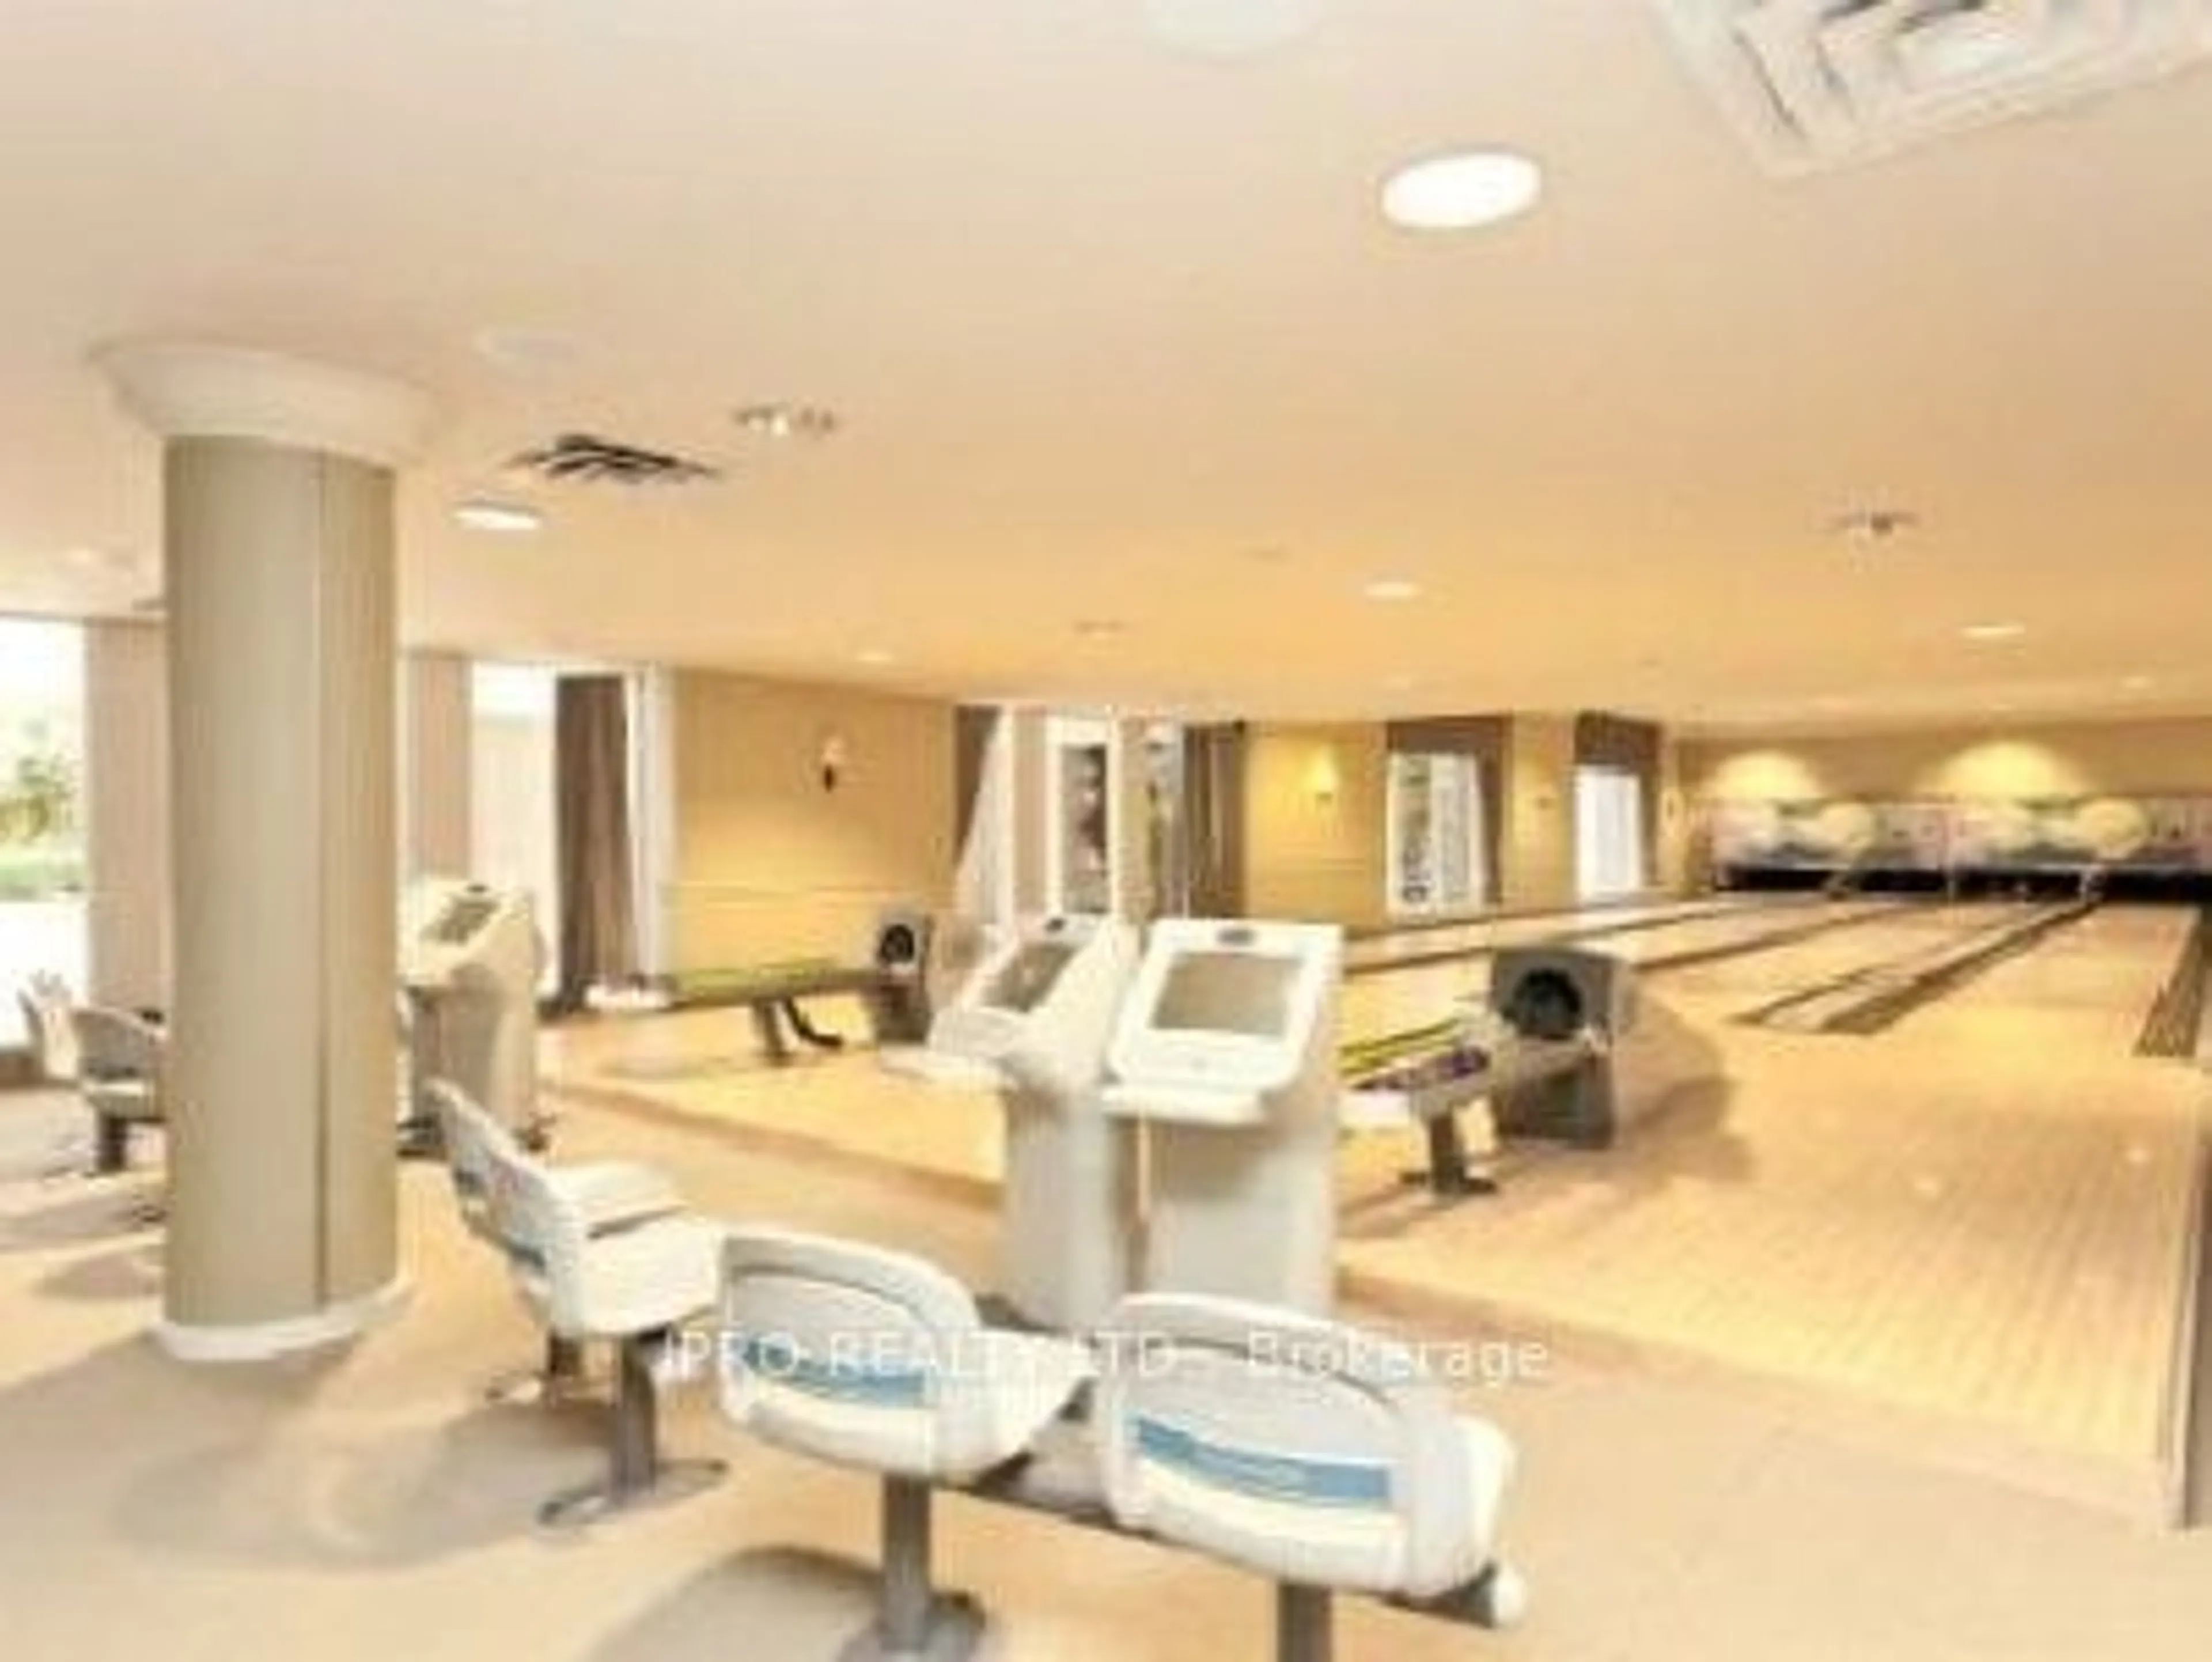 Gym or fitness room for 35 Kingsbridge Gdns #812, Mississauga Ontario L5R 3Z5